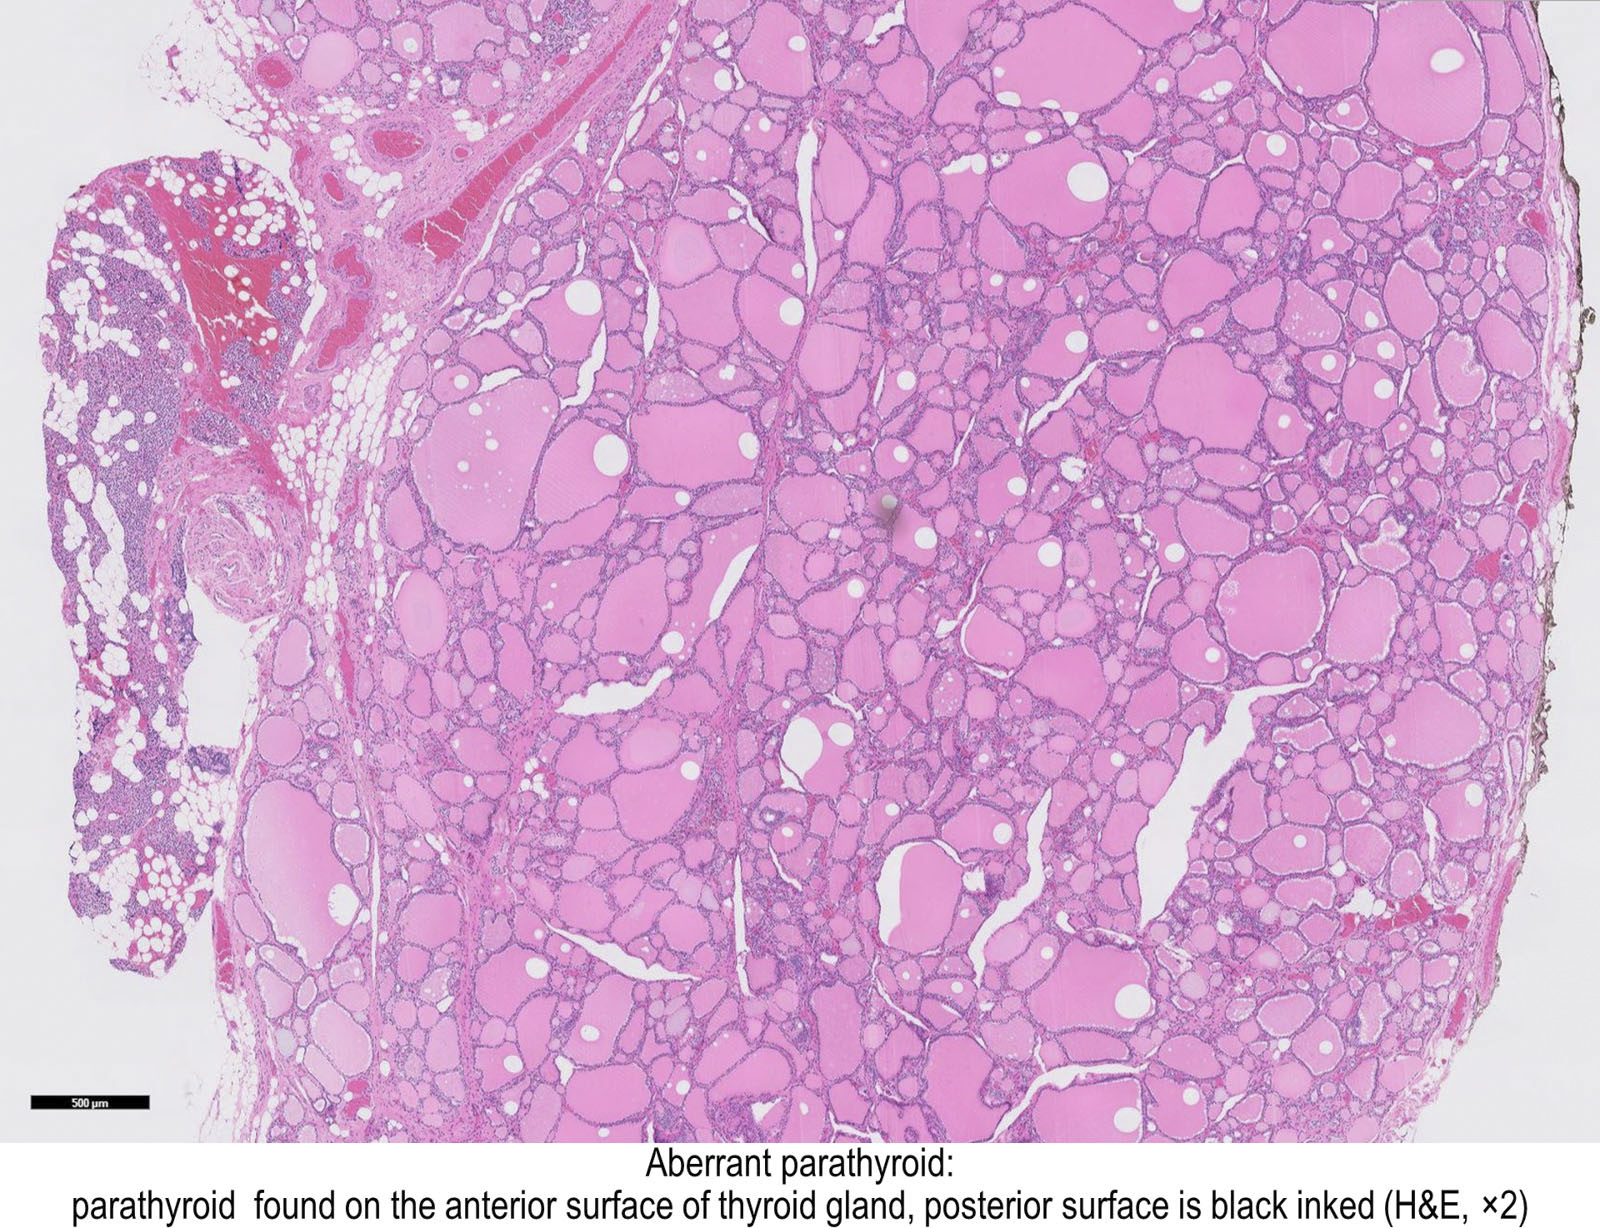 pathology outlines - ectopic parathyroid tissue